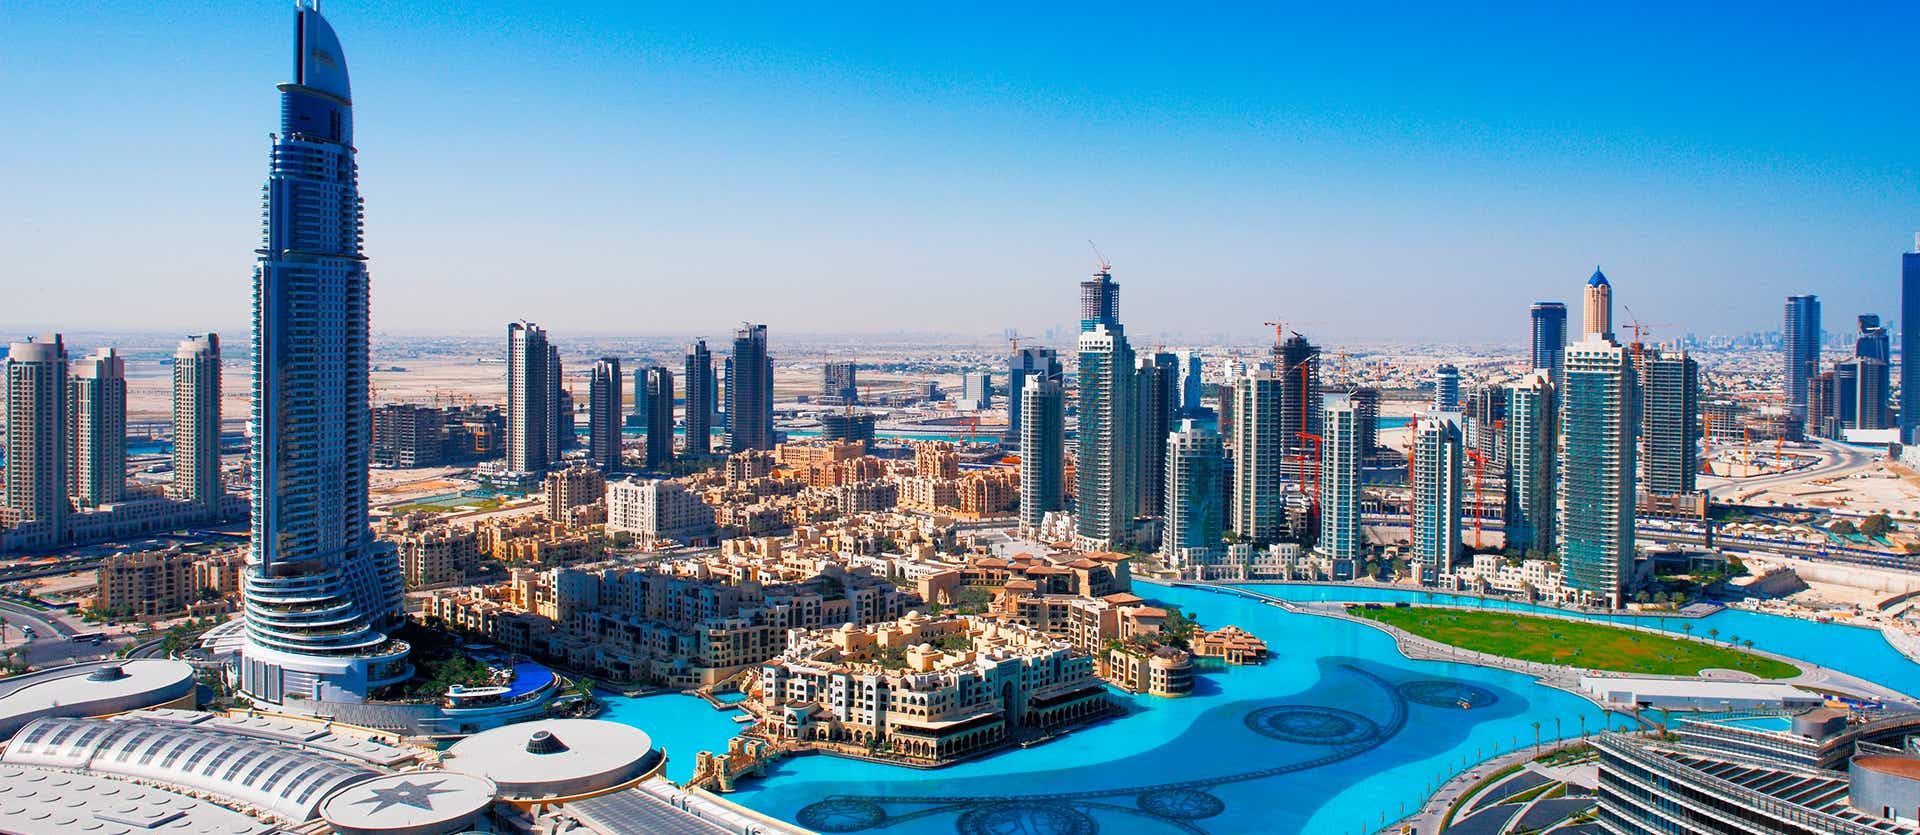 Skyline of Dubai <span class="iconos separador"></span> United Arab Emirates